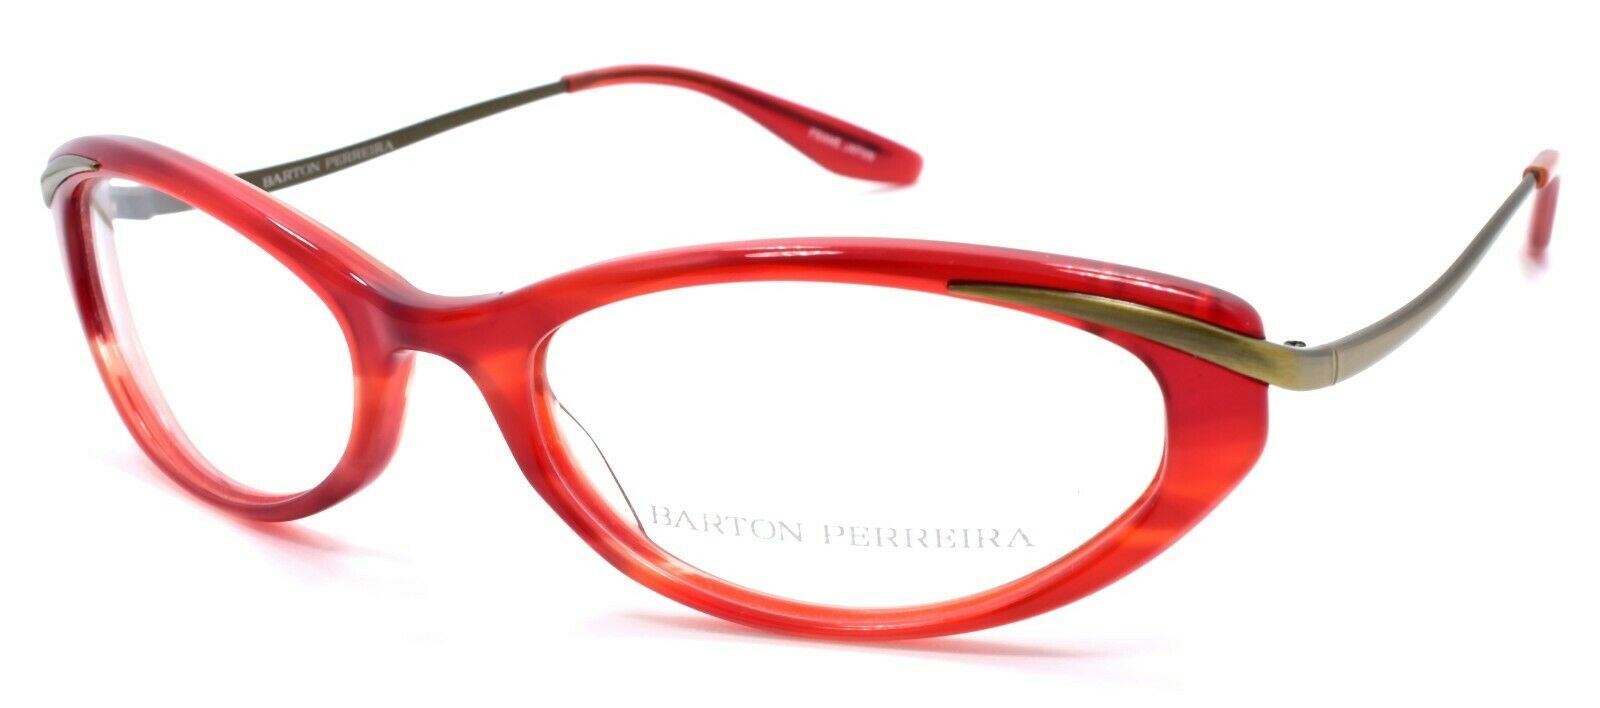 1-Barton Perreira Sweet Nadine Women's Glasses Frames 53-18-133 Scarlet Red-672263039709-IKSpecs